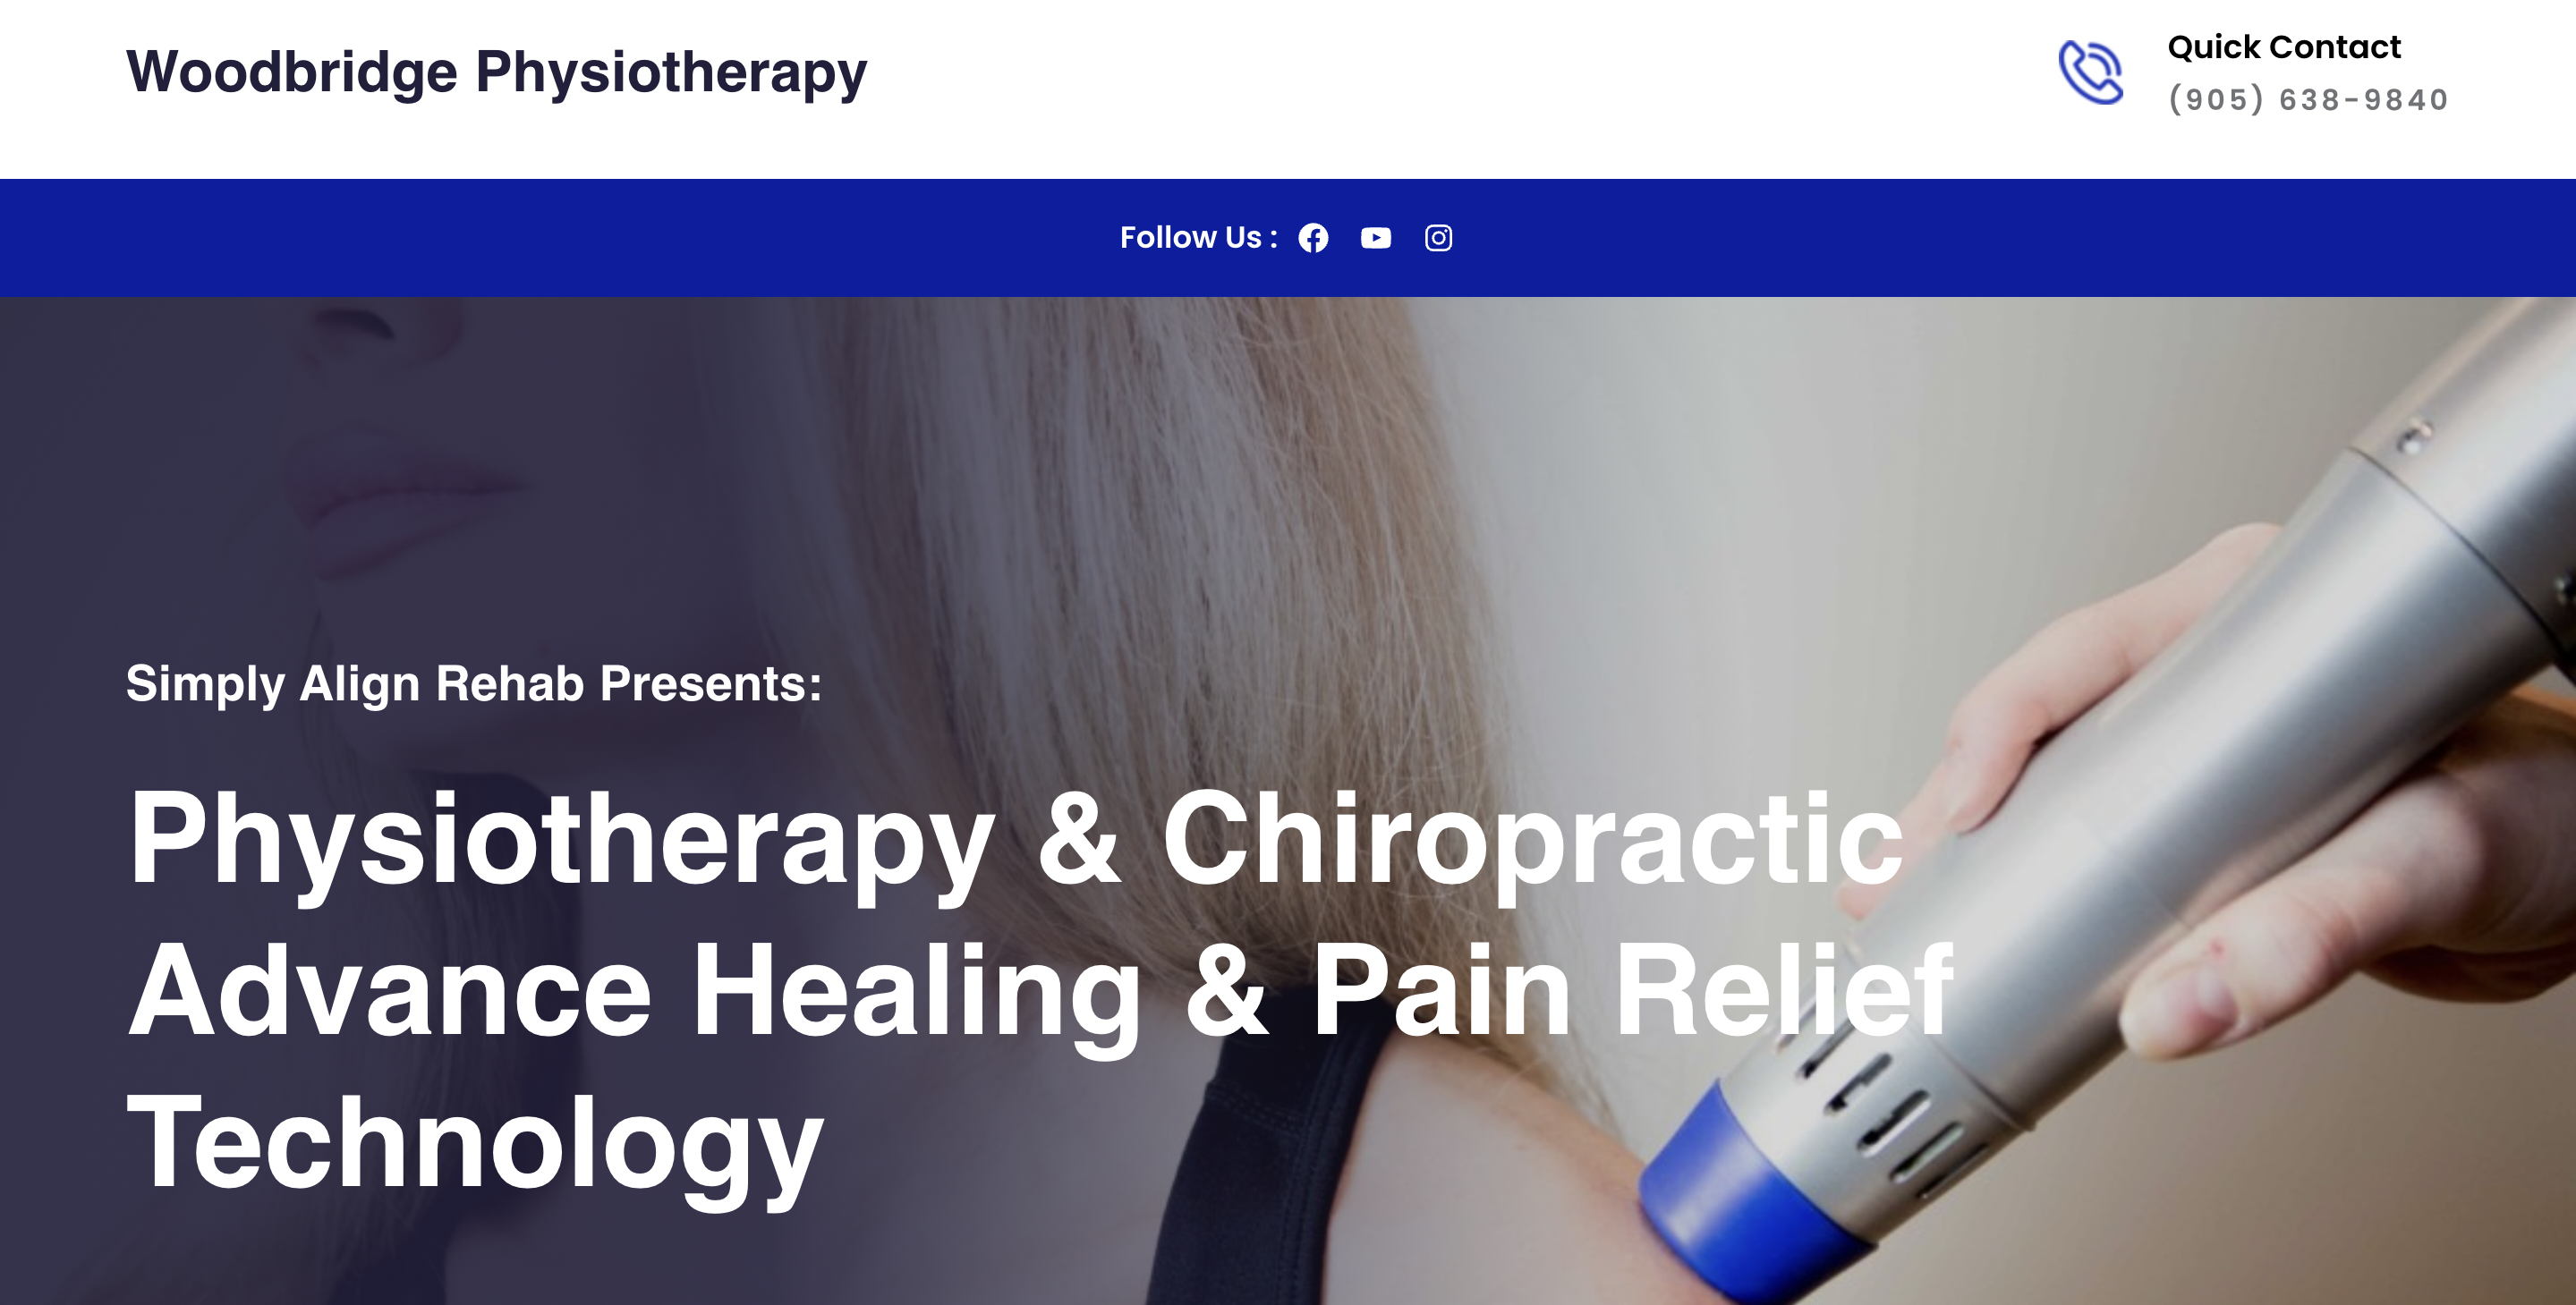 Woodbridge Physiotherapy Website Design